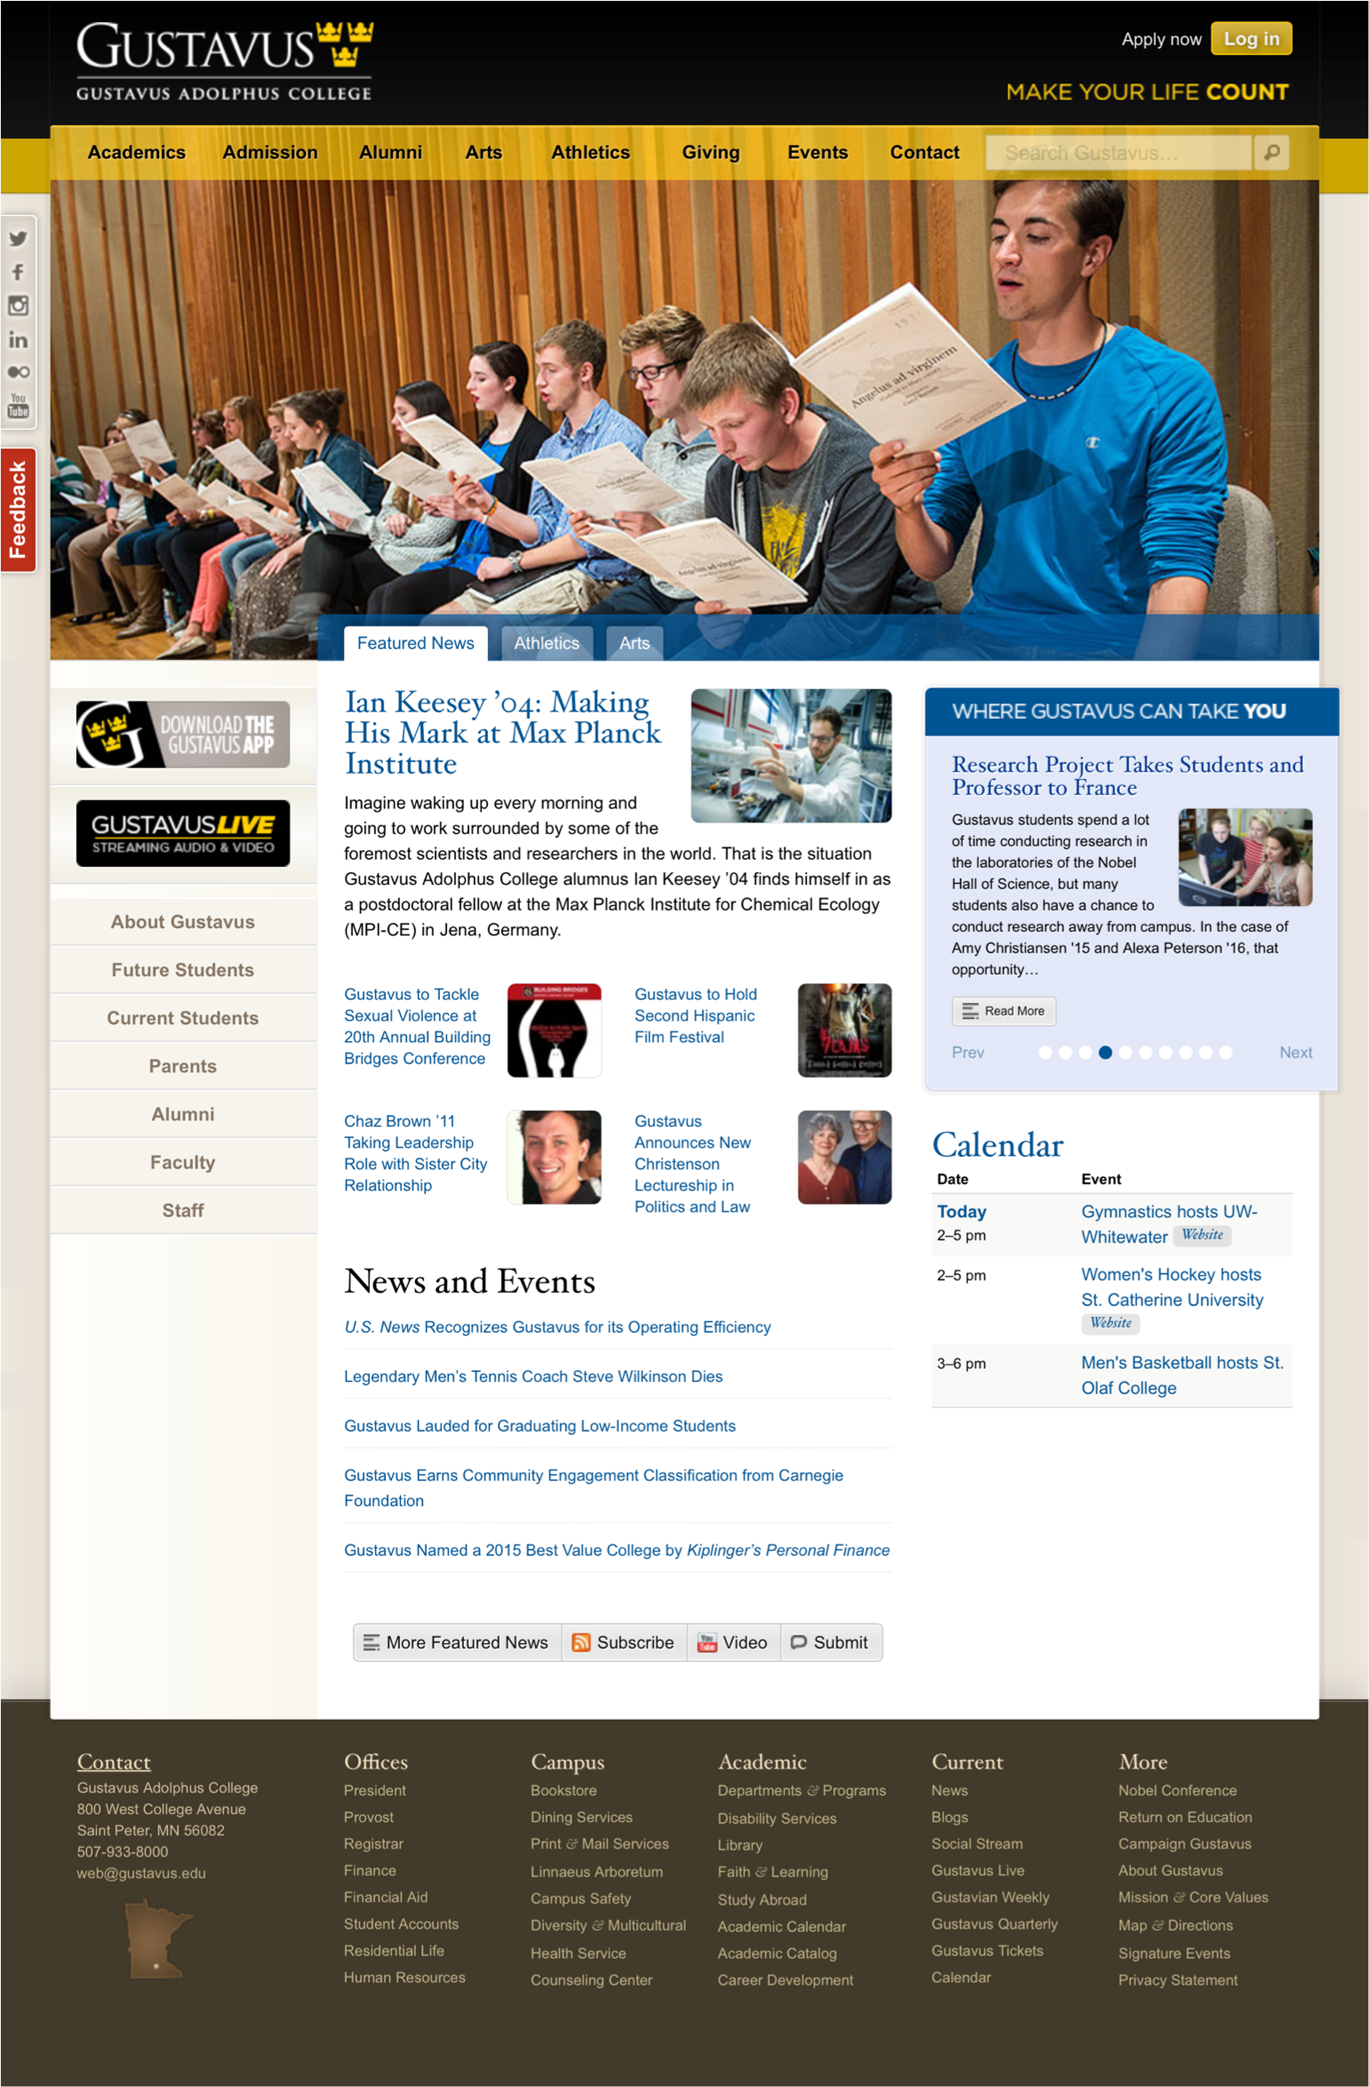 Gustavus Adolphus College’s main page